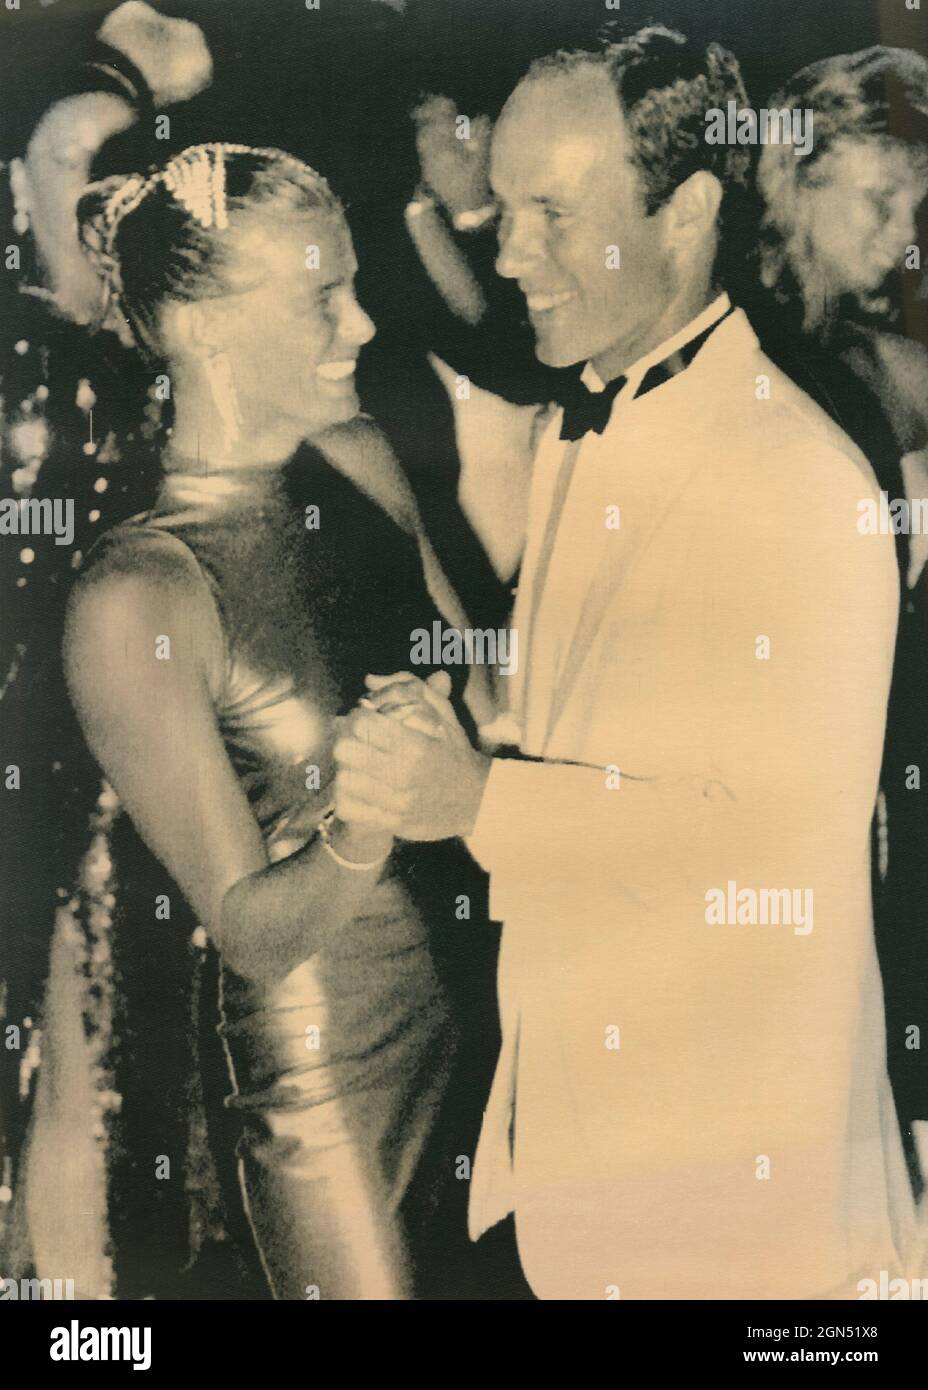 Prince Albert II of Monaco dancing with his sister Princess Stephanie, 1989 Stock Photo